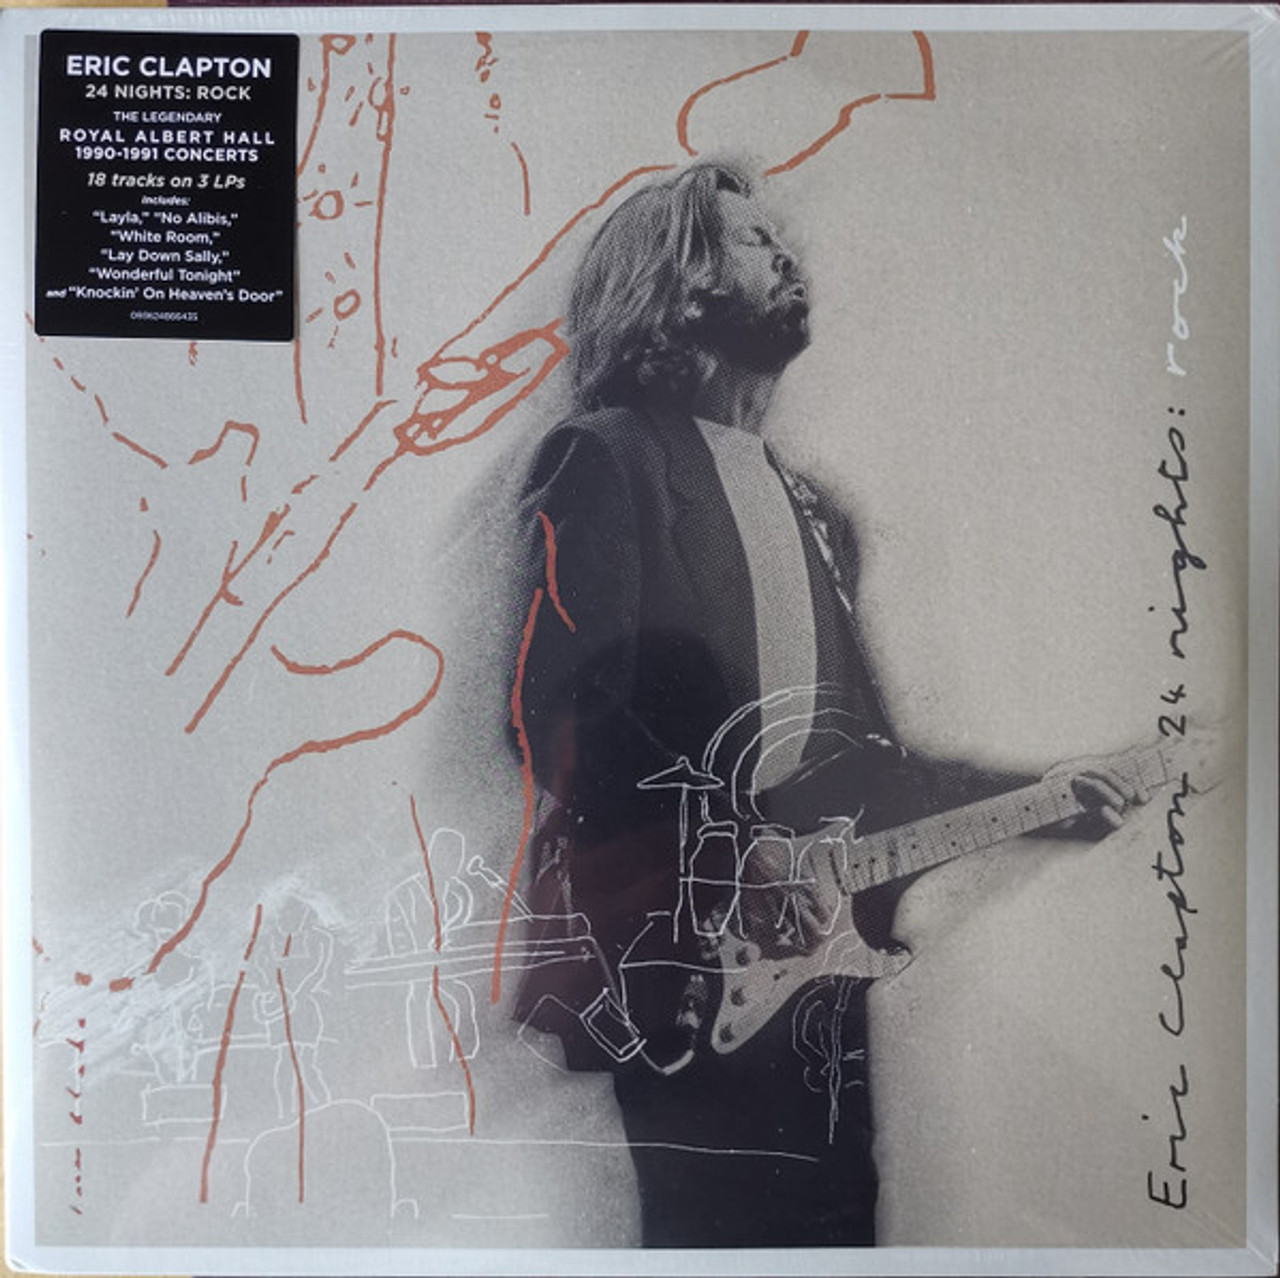 24 Nights: Rock - Clapton, Eric (#093624866435)